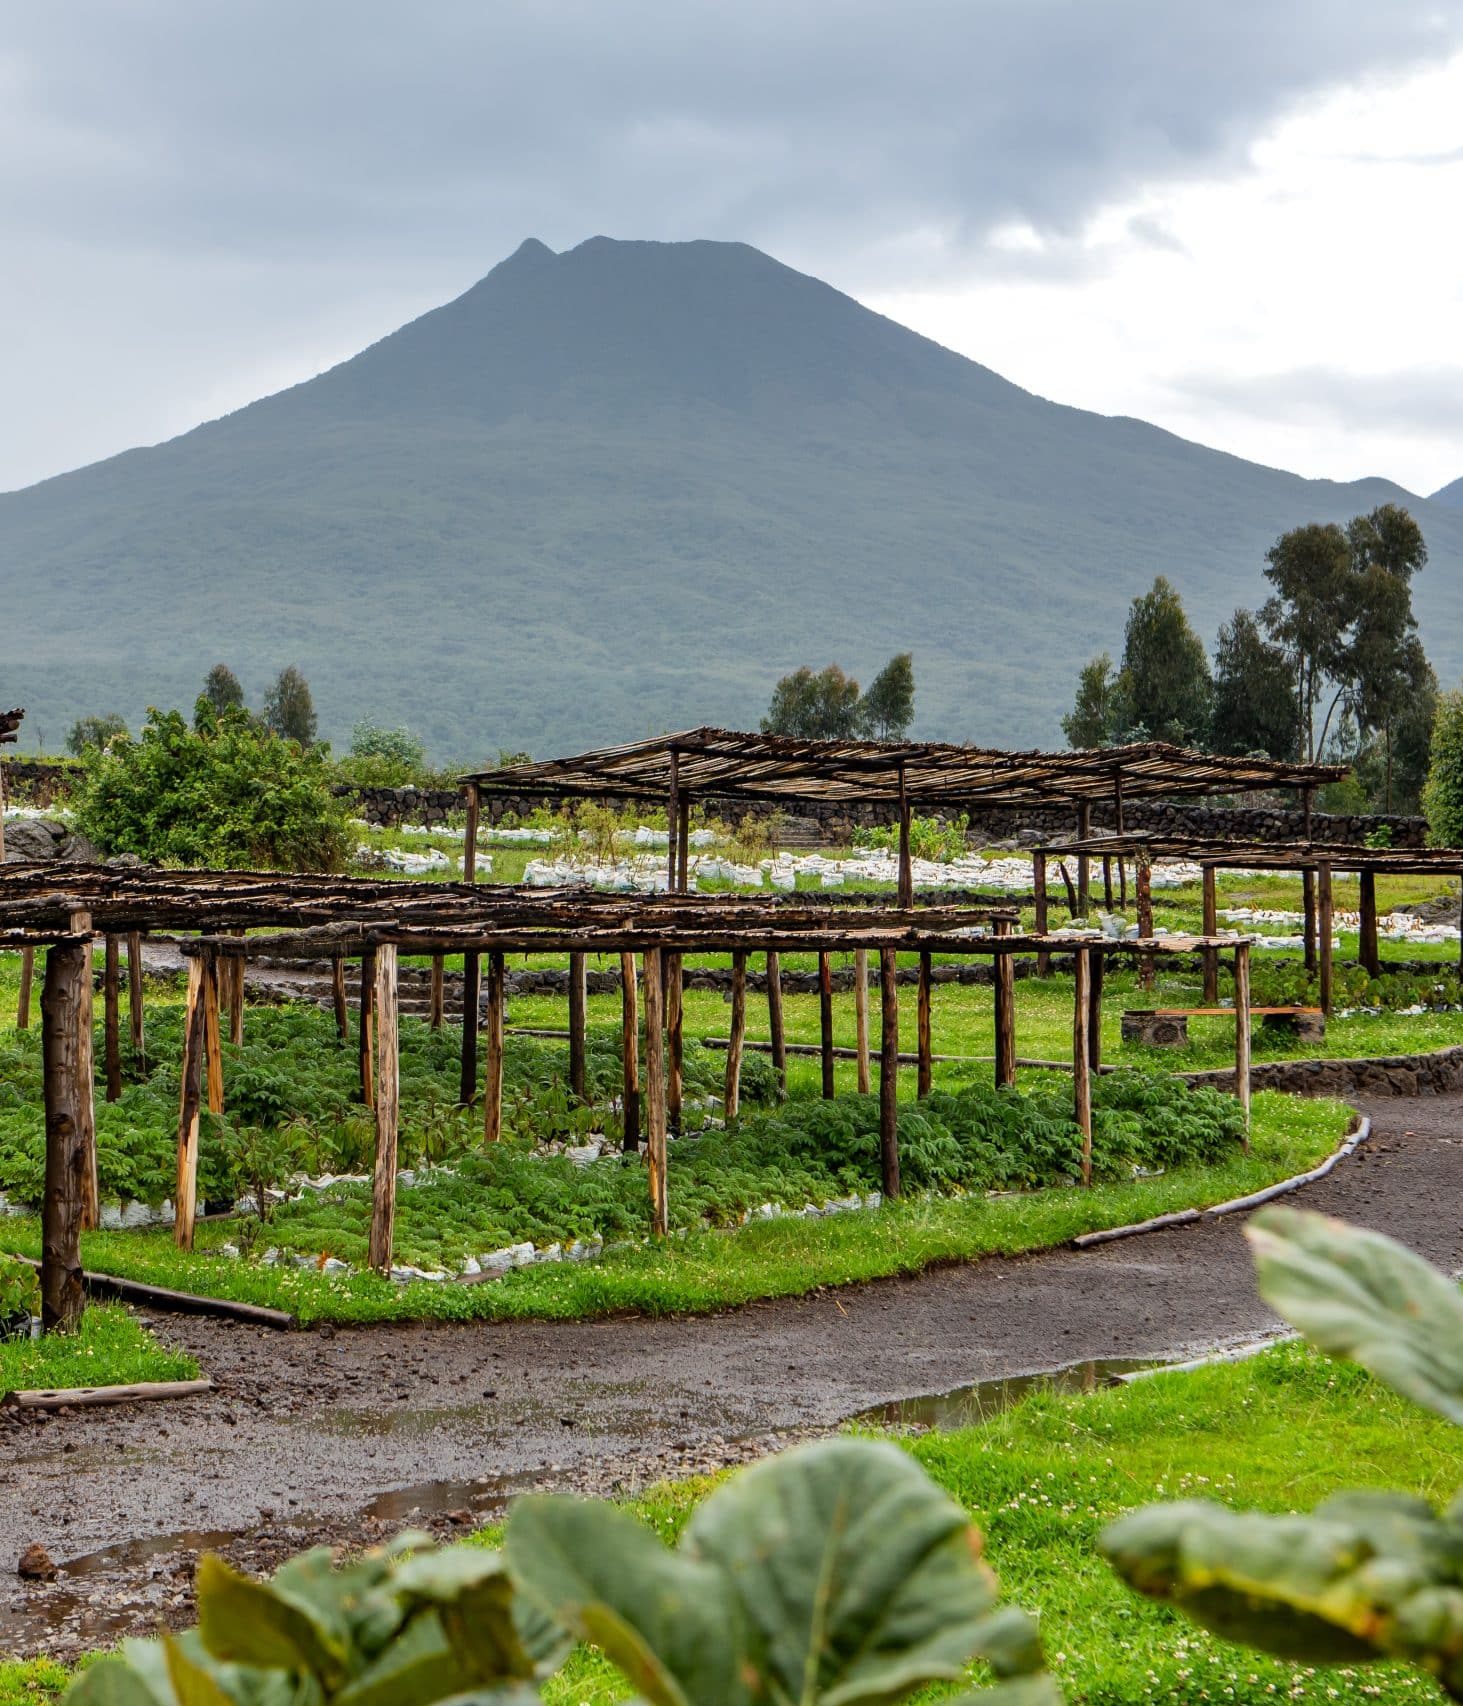 Jardin et parc national des volcans en fonds Singita Kwitonda Lodge Rwanda